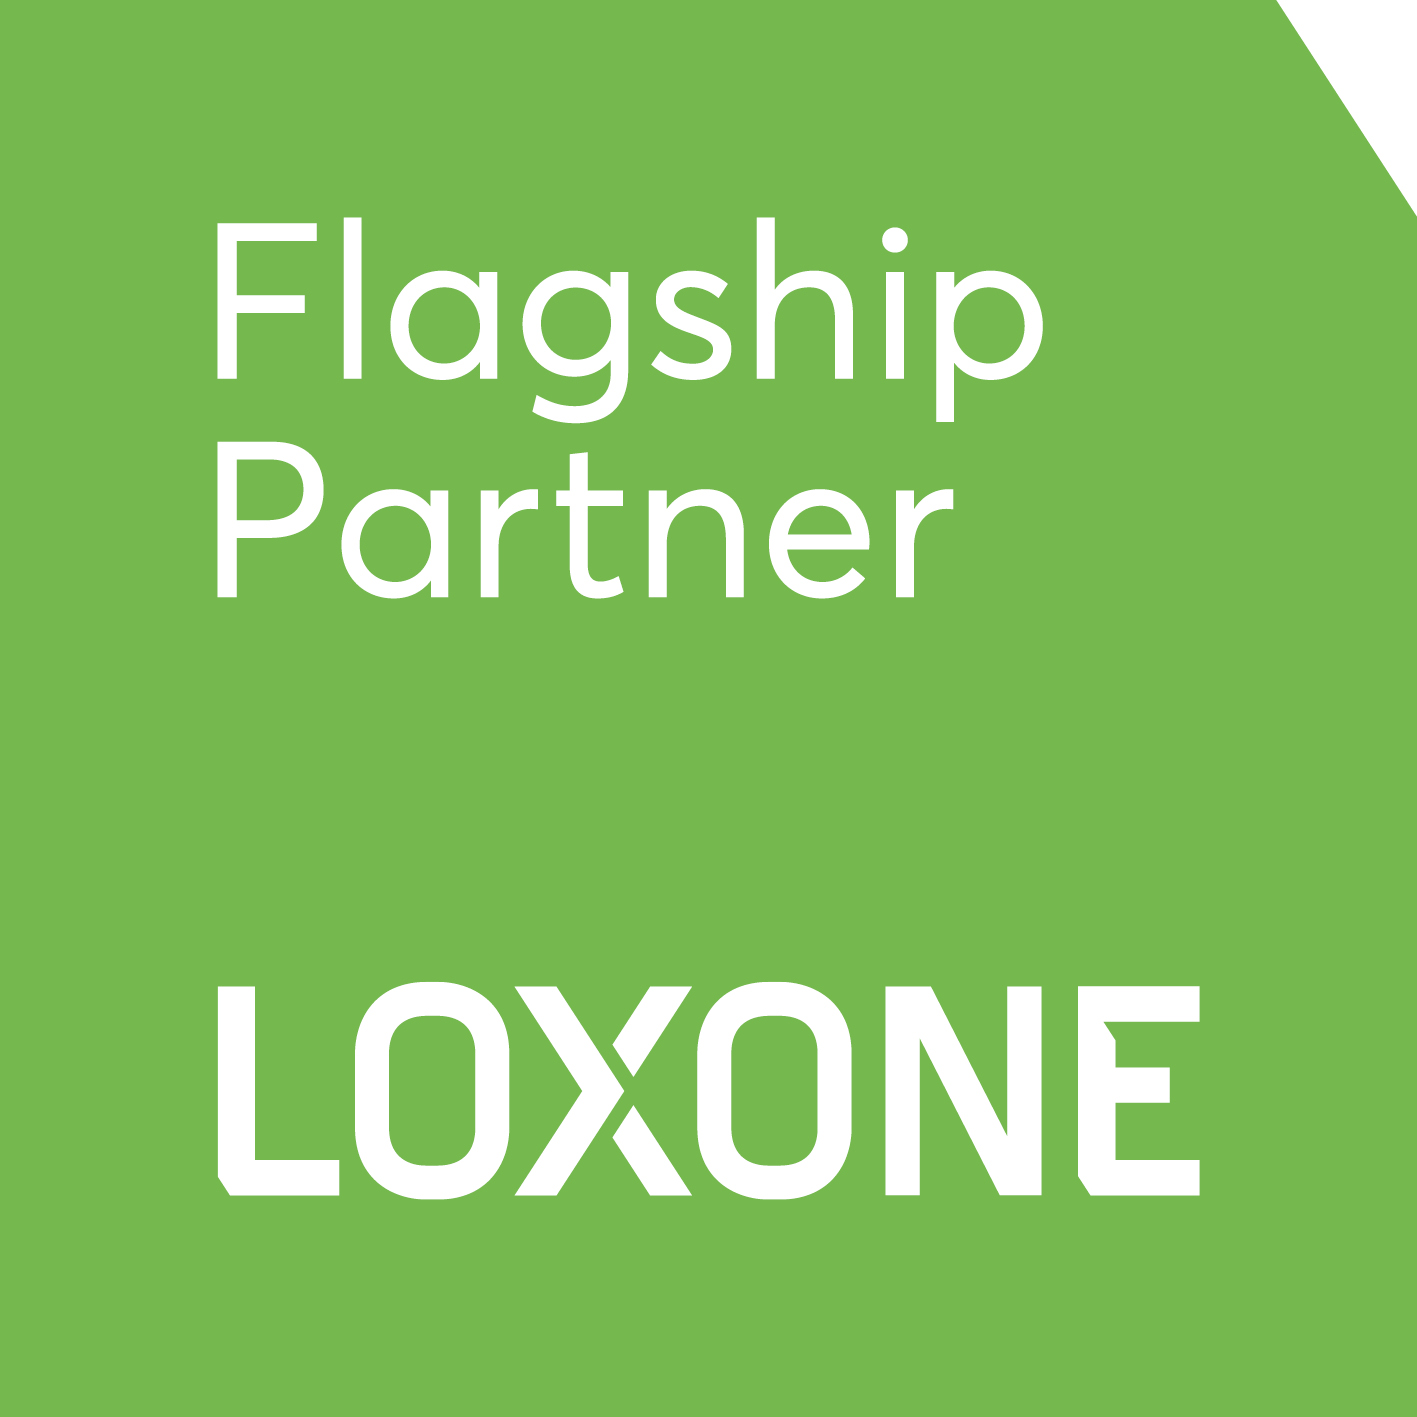 Loxone flagship partner